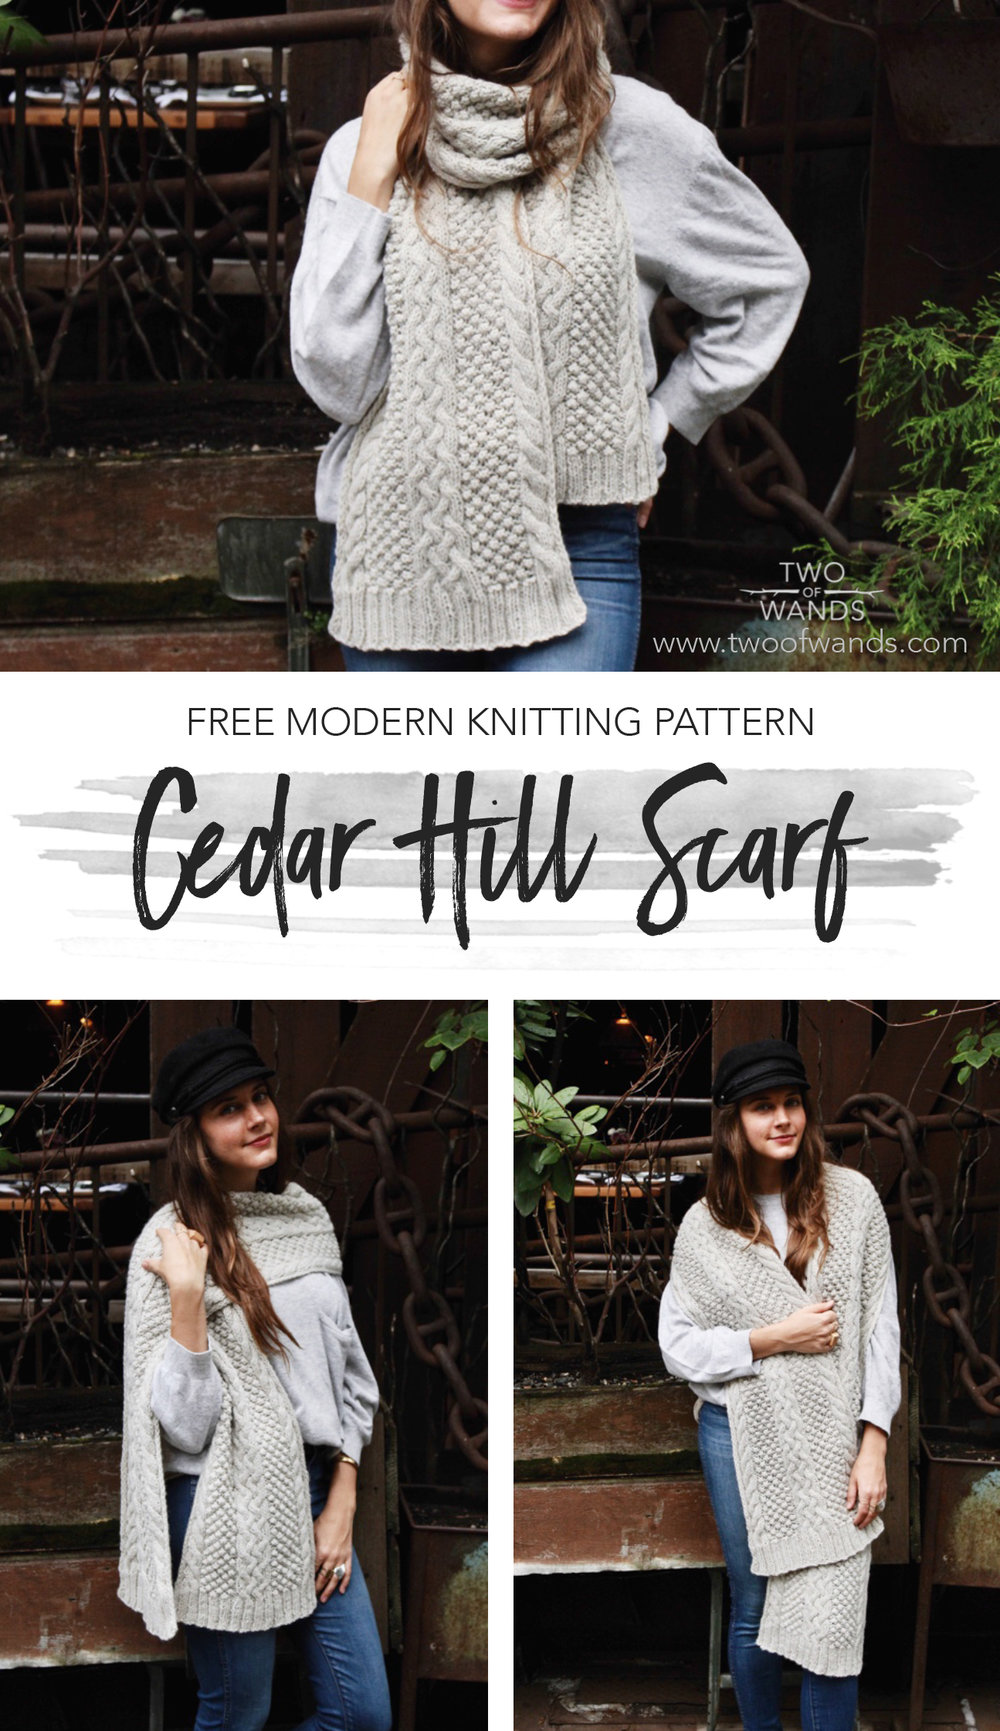 Cedar Hill Scarf pattern by Two of Wands